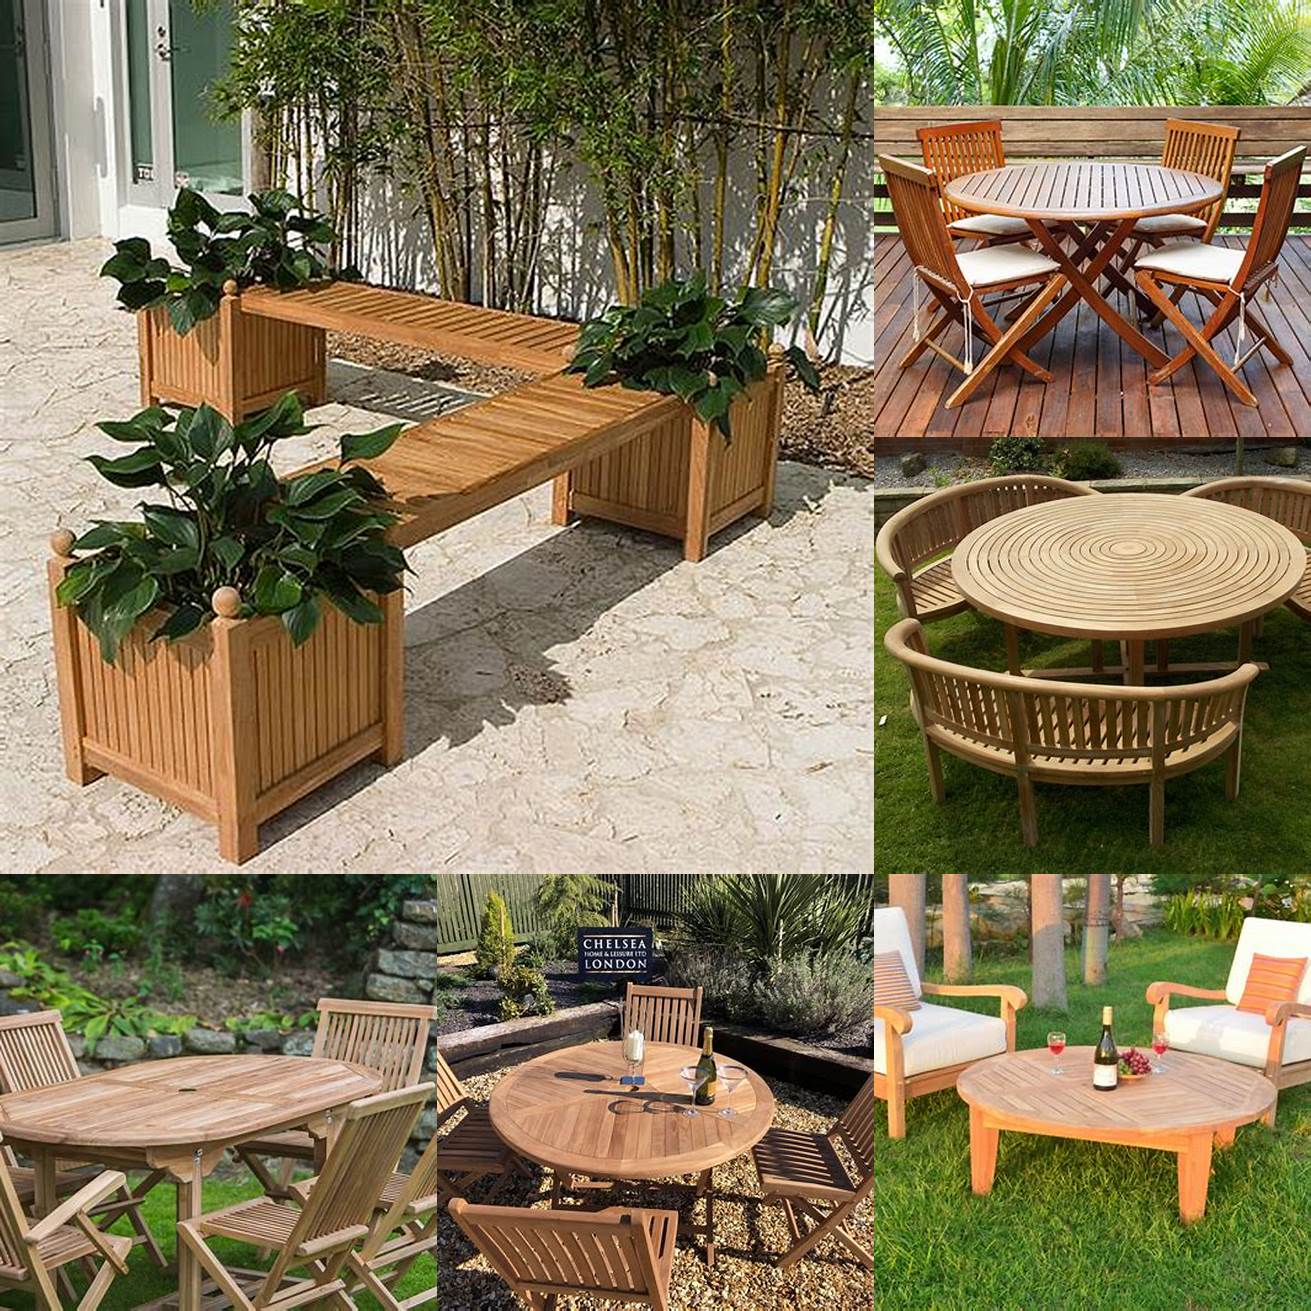 Teak Furniture with Outdoor Plants